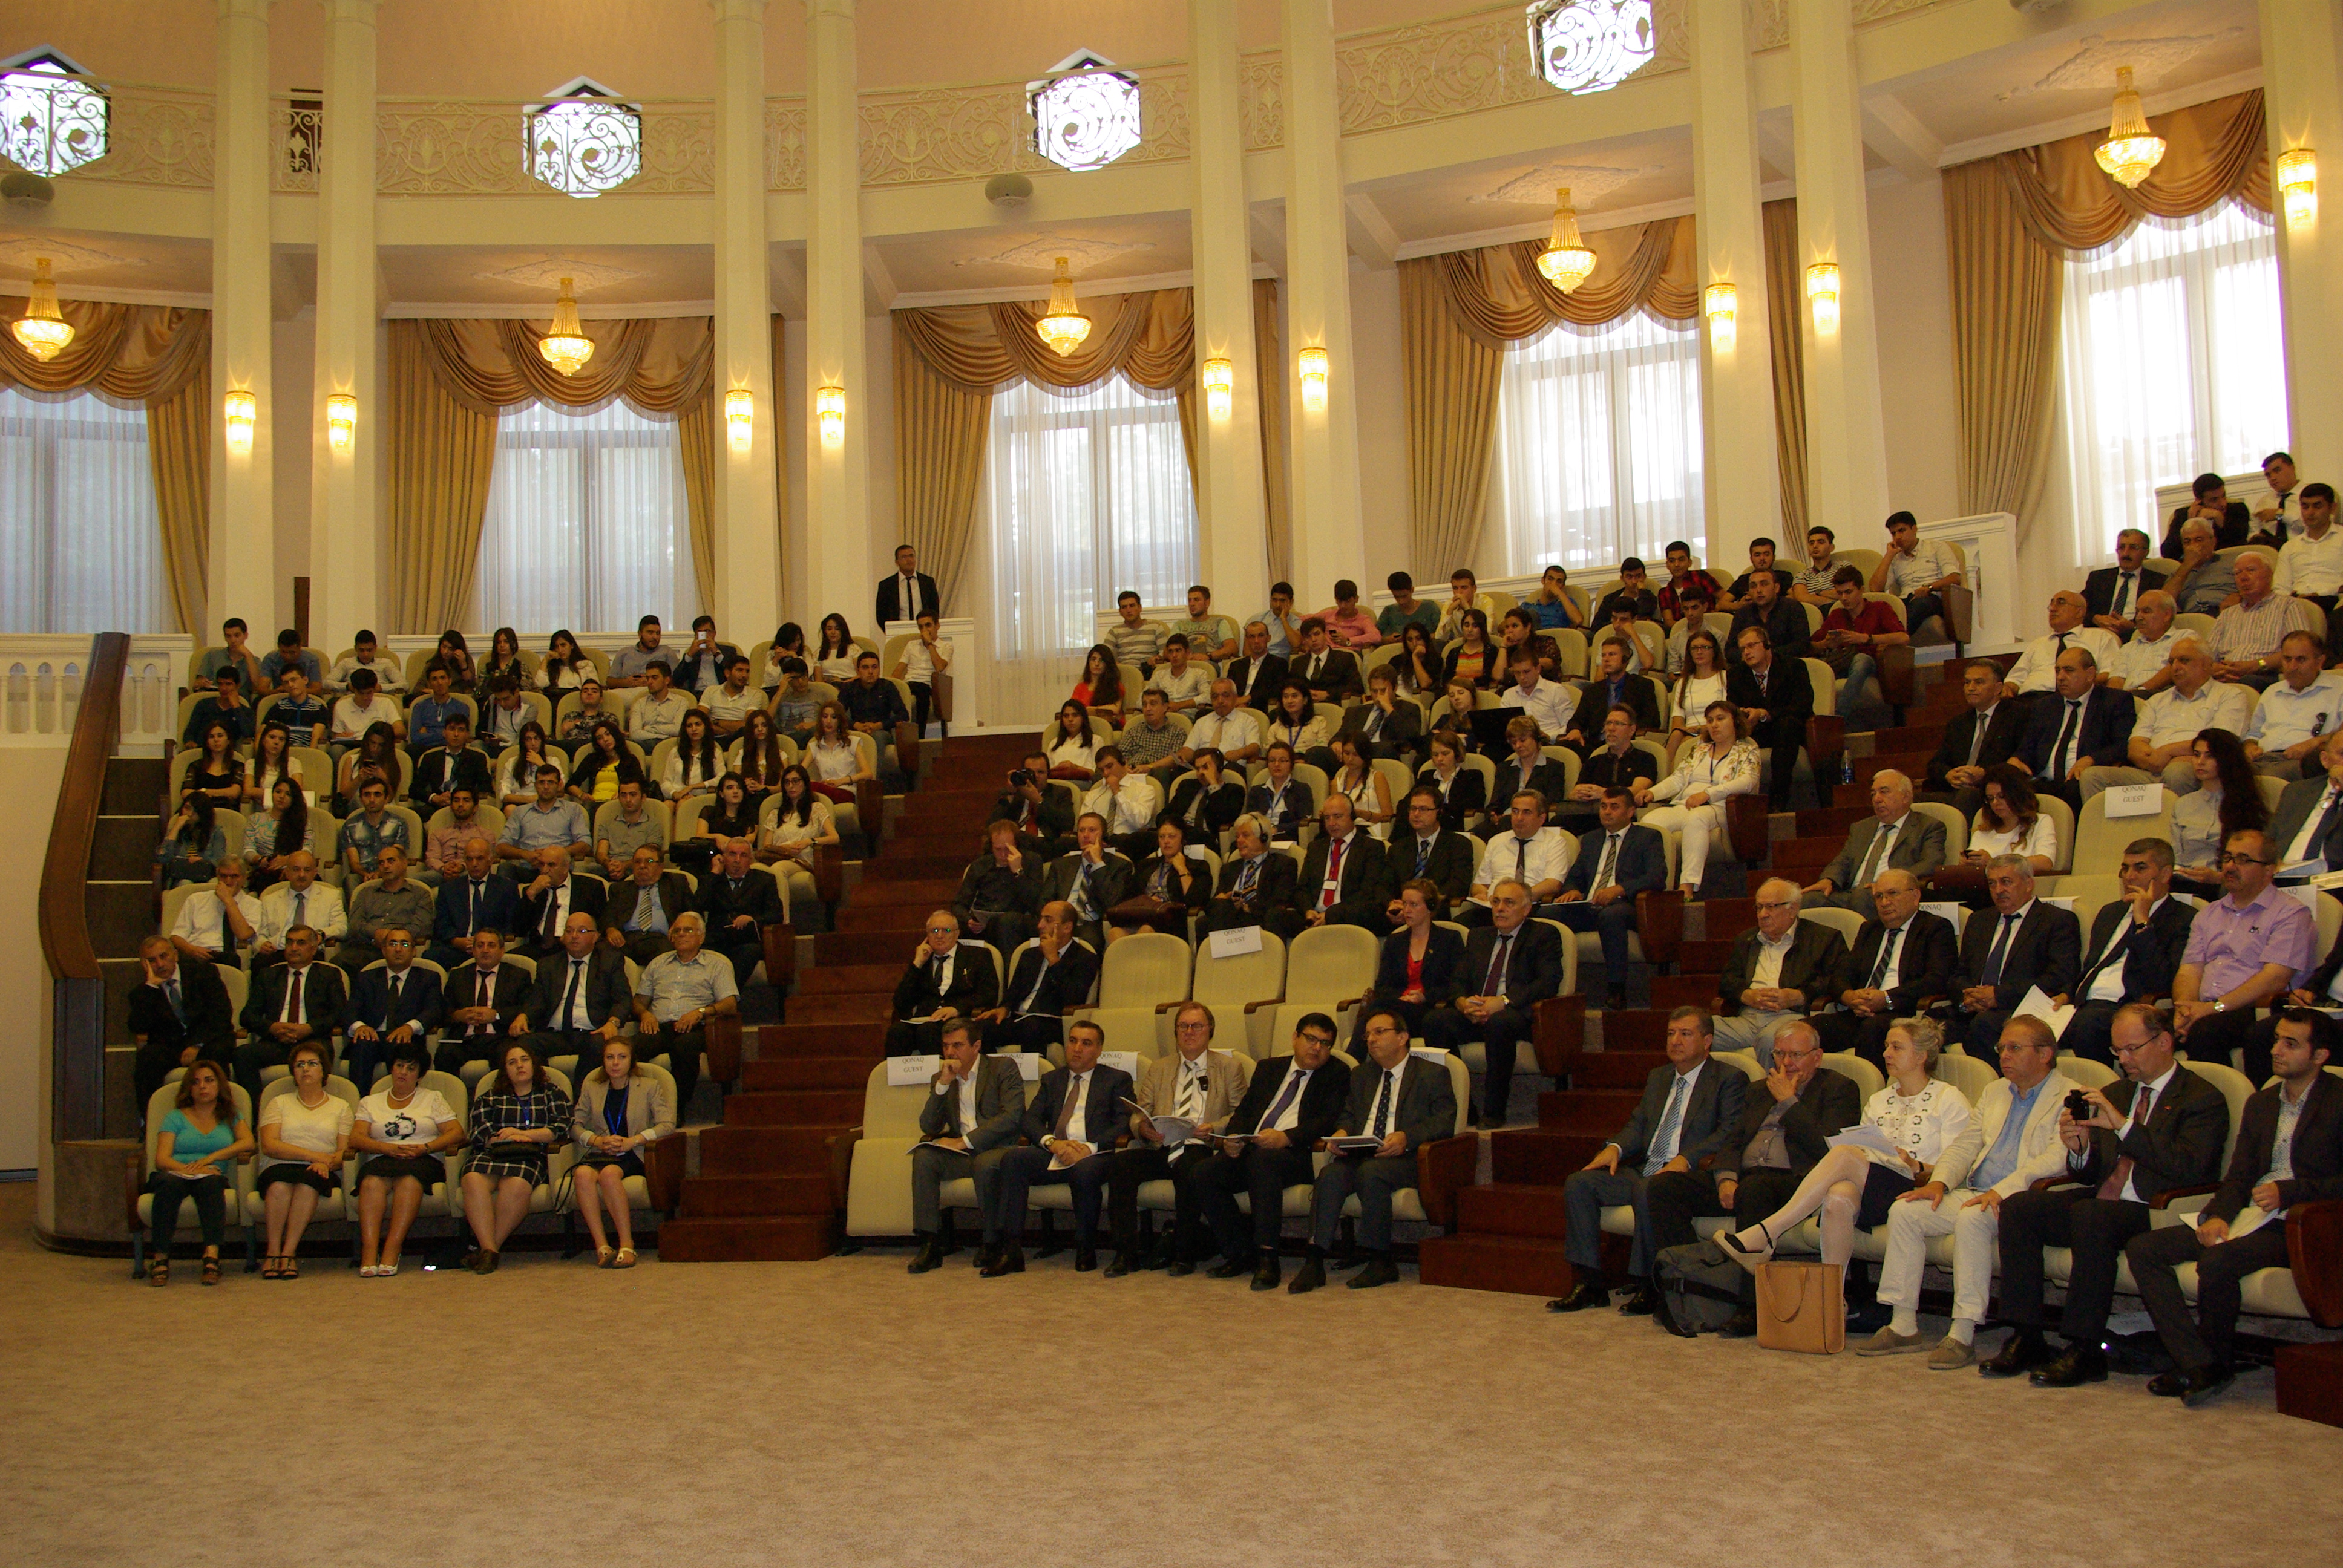 23 September 2015, 516678 TEMPUS-1-2011-1-DE-TEMPUS-JPCR . Tempus project final conference on “Energy management” at Azerbaijan Technical University, in Baku , Azerbaijan.